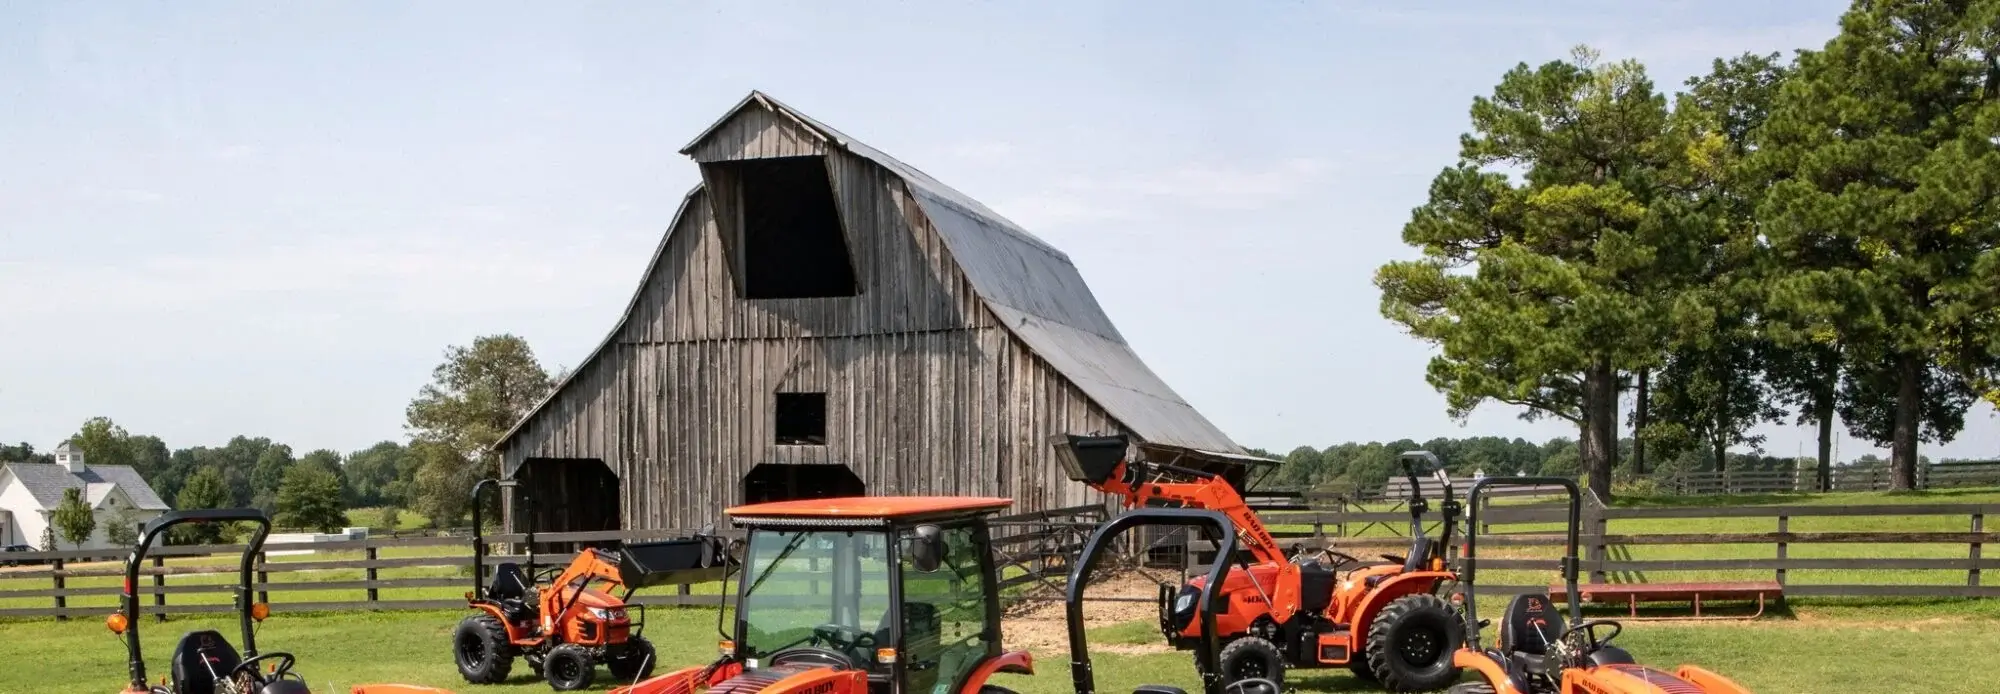 Barn with orange tractors